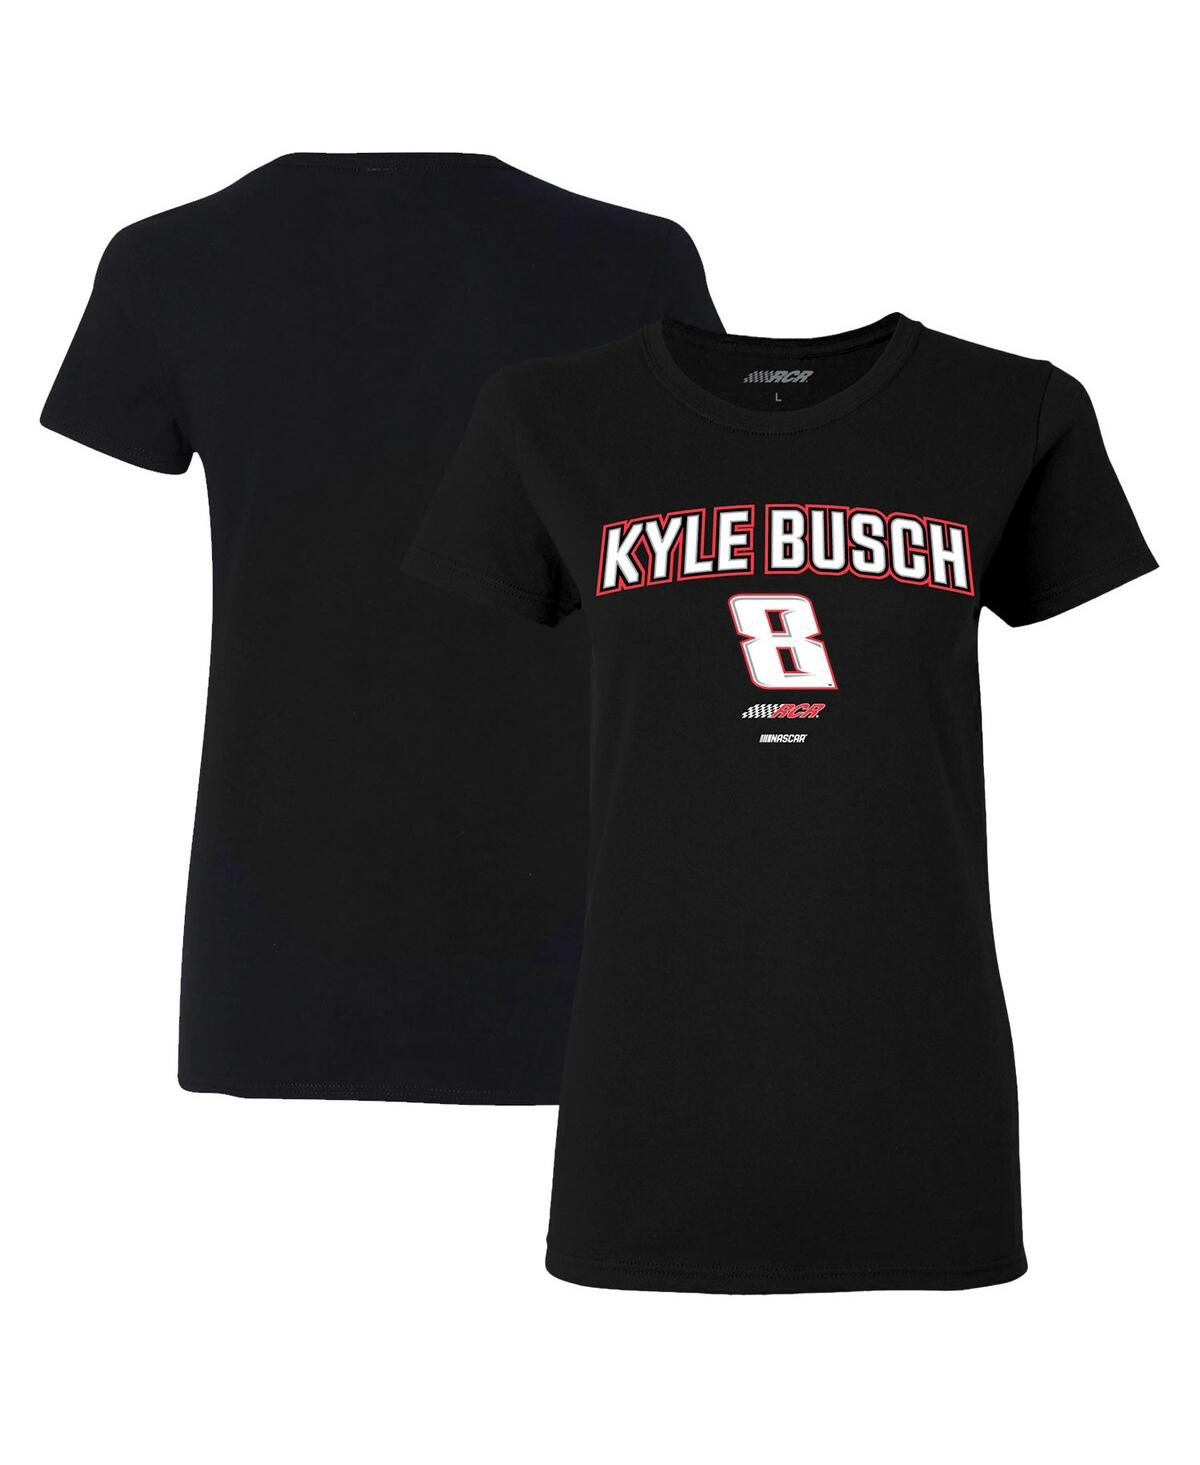 Women's Richard Childress Racing Team Collection Black Kyle Busch Rival T-shirt - Black